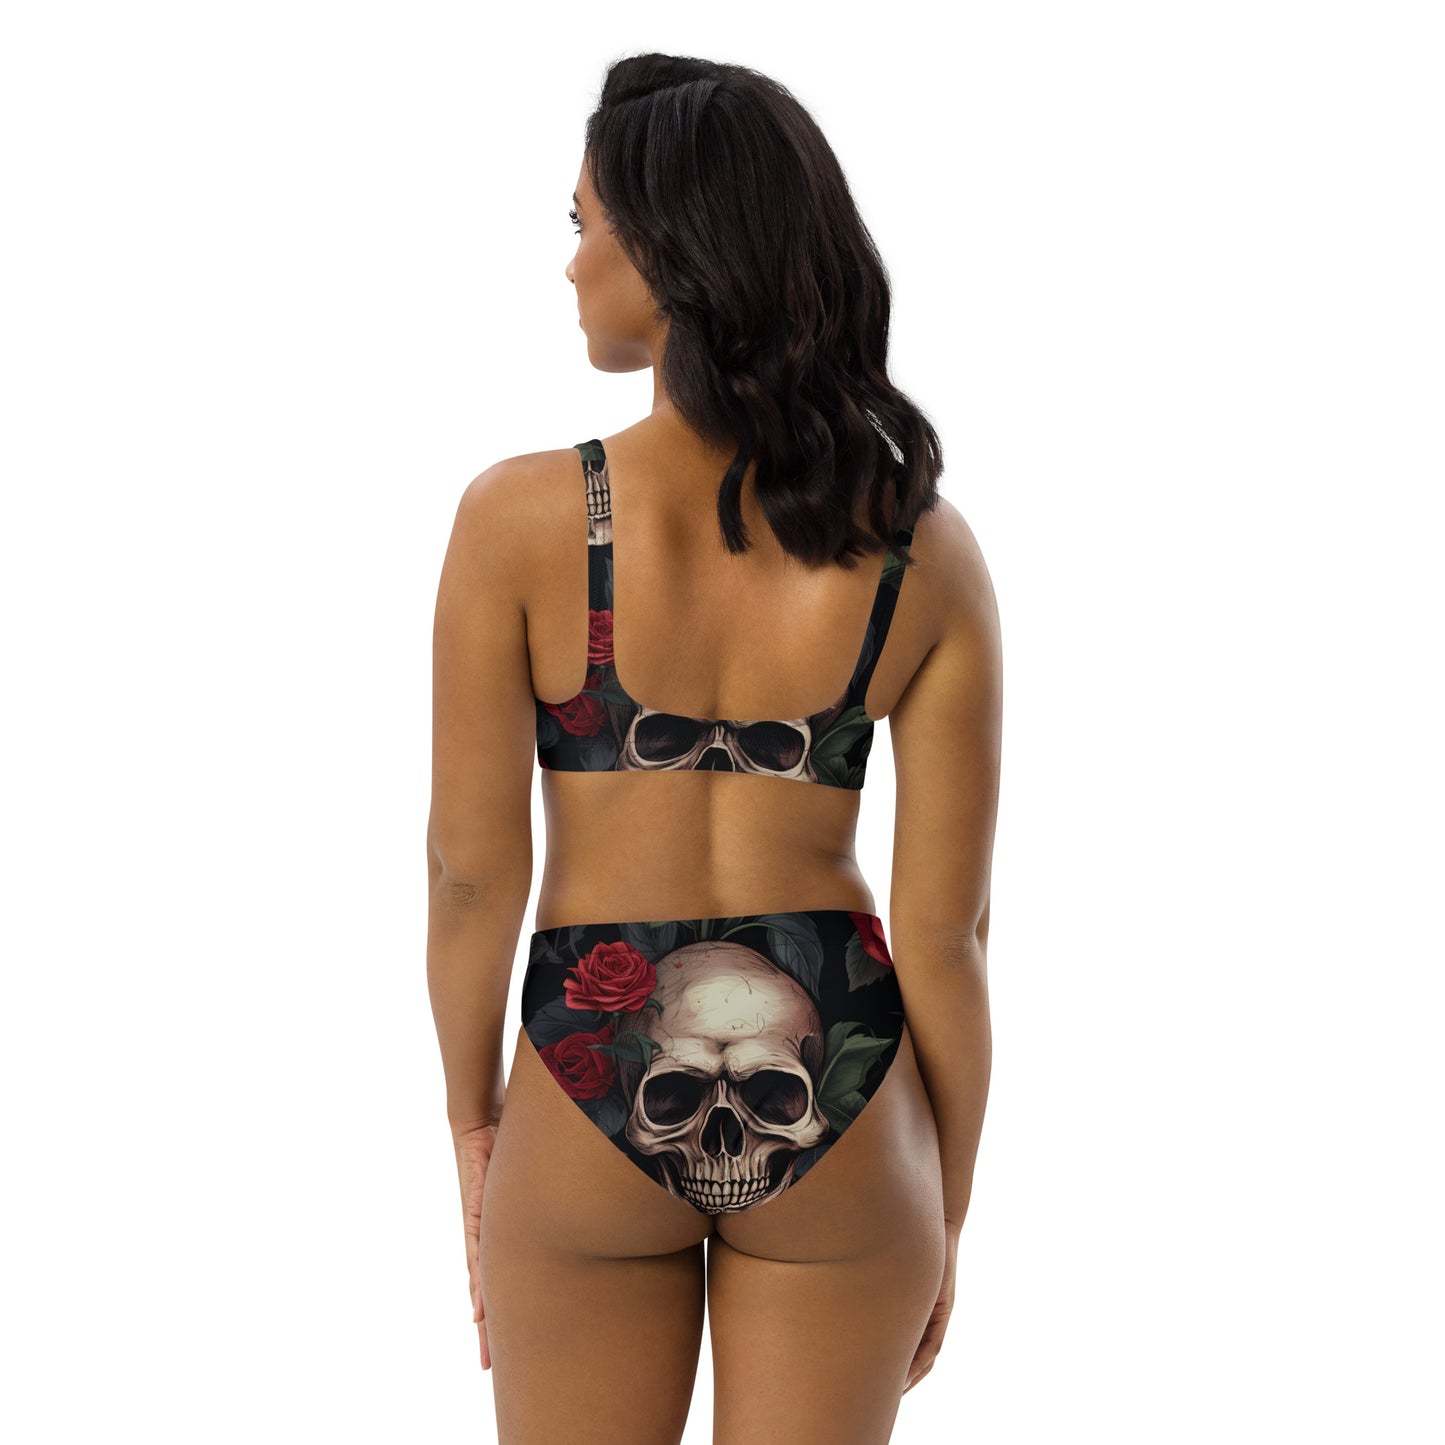 Soft Goth Bikini / Gothic Swimsuit With Skull / Recycled High-Waisted Bikini / Eco Goth Fashion